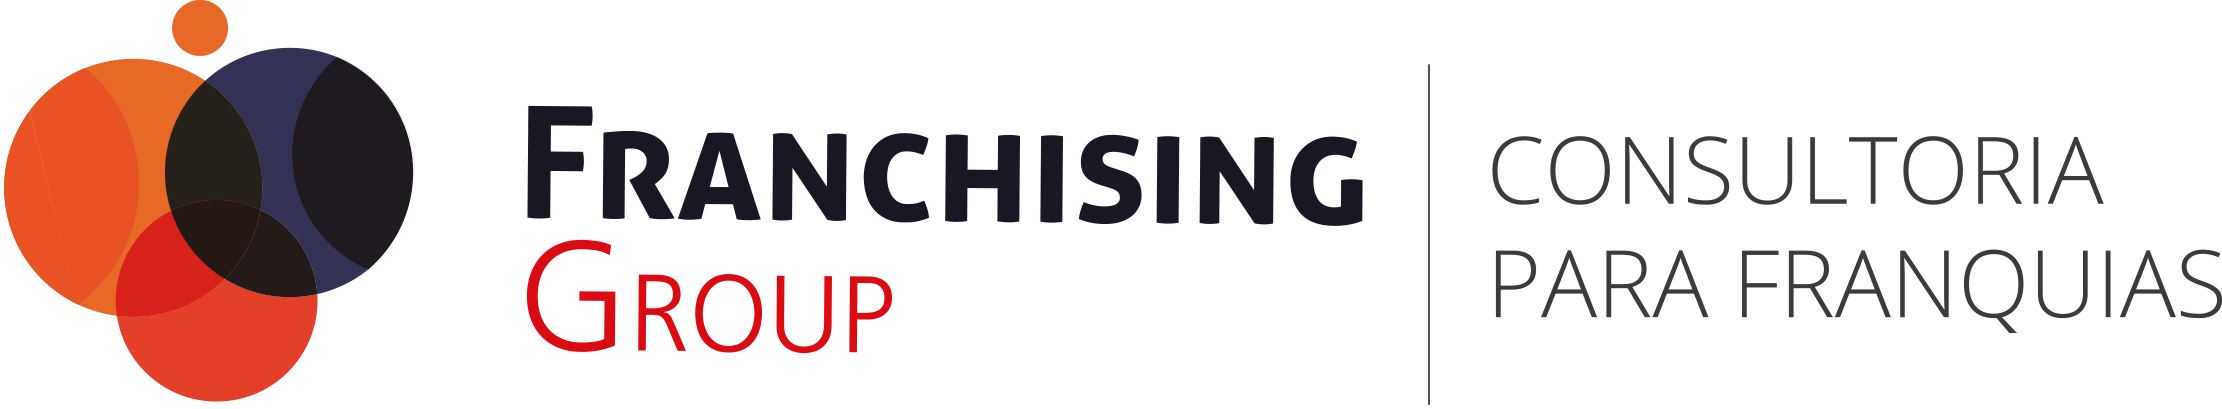 logo franchising